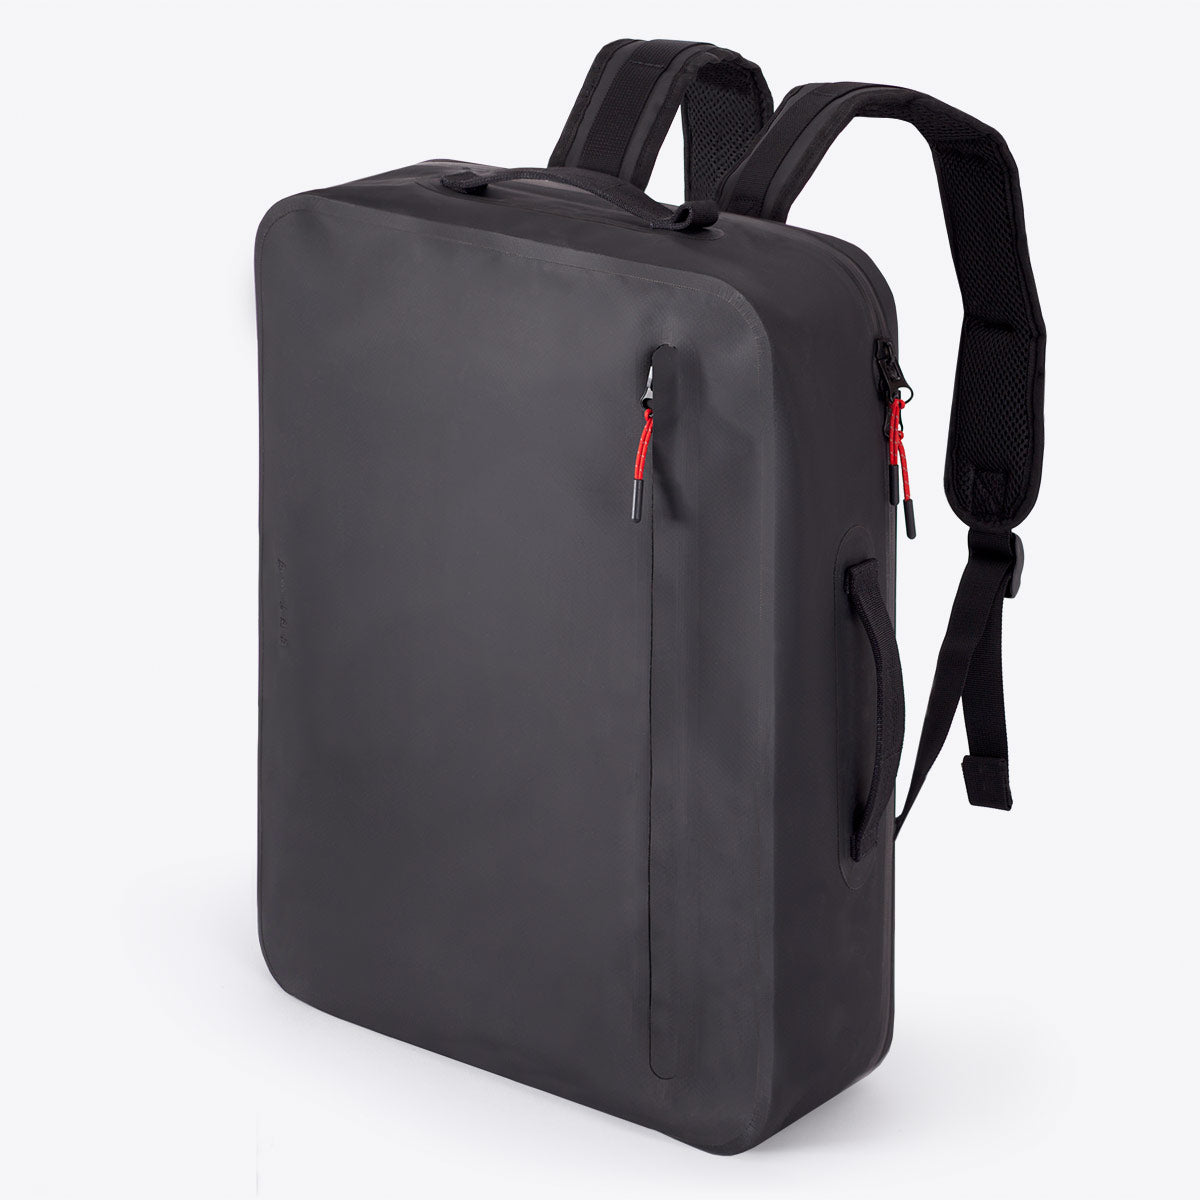 Model E • Briefcase/ Backpack • Medium • Black